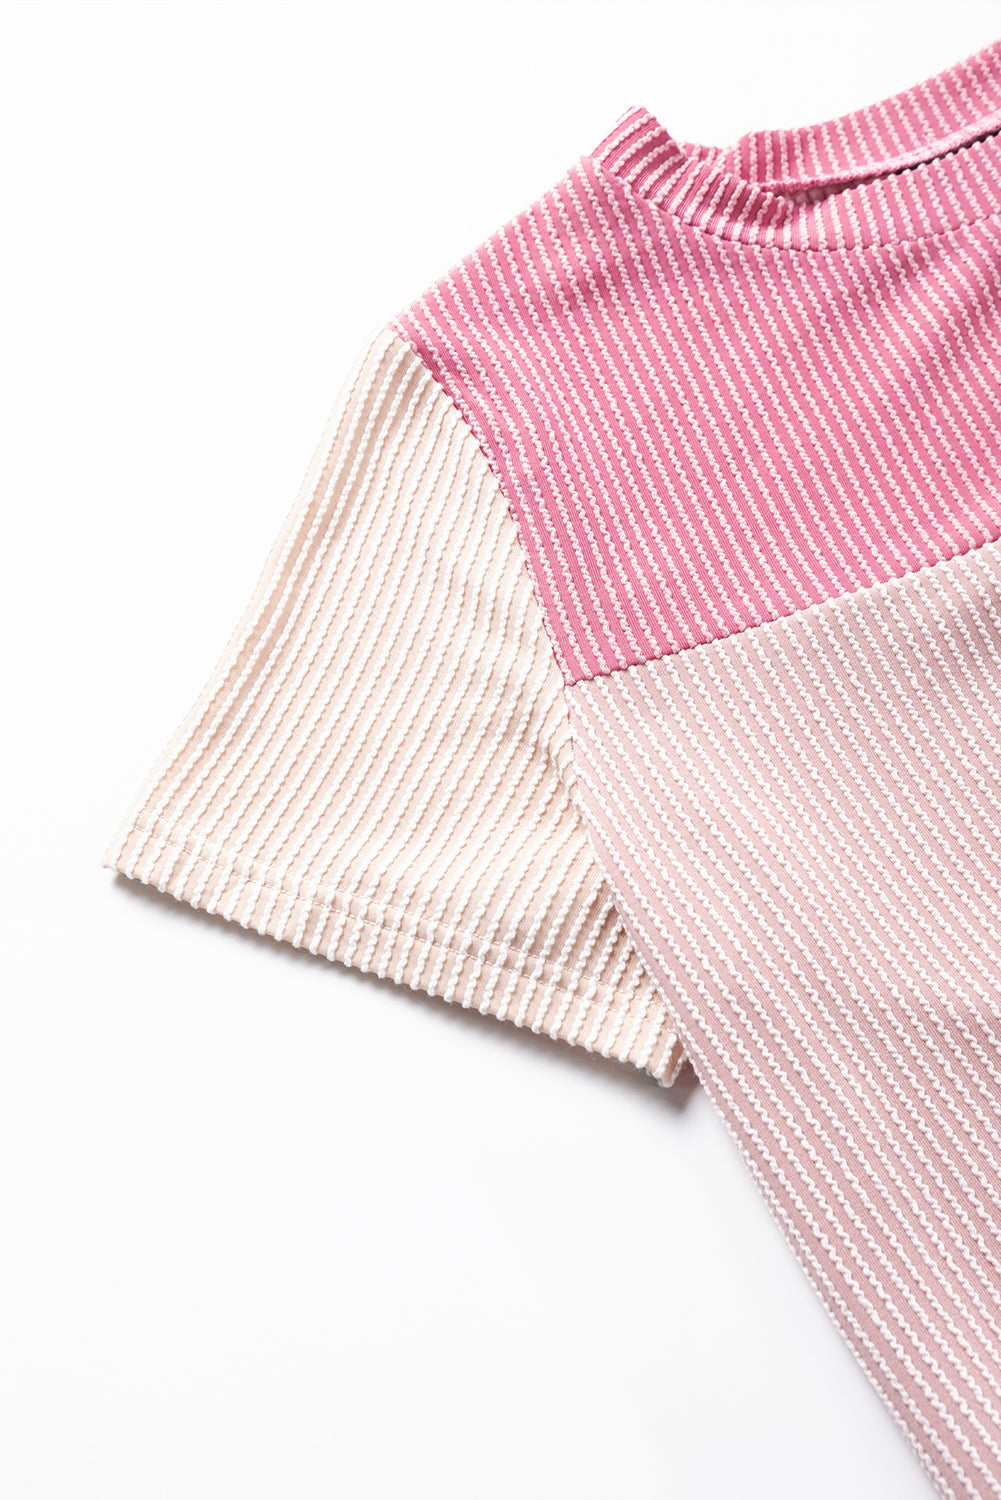 Rosafarbenes, geripptes Colorblock-T-Shirt mit Struktur